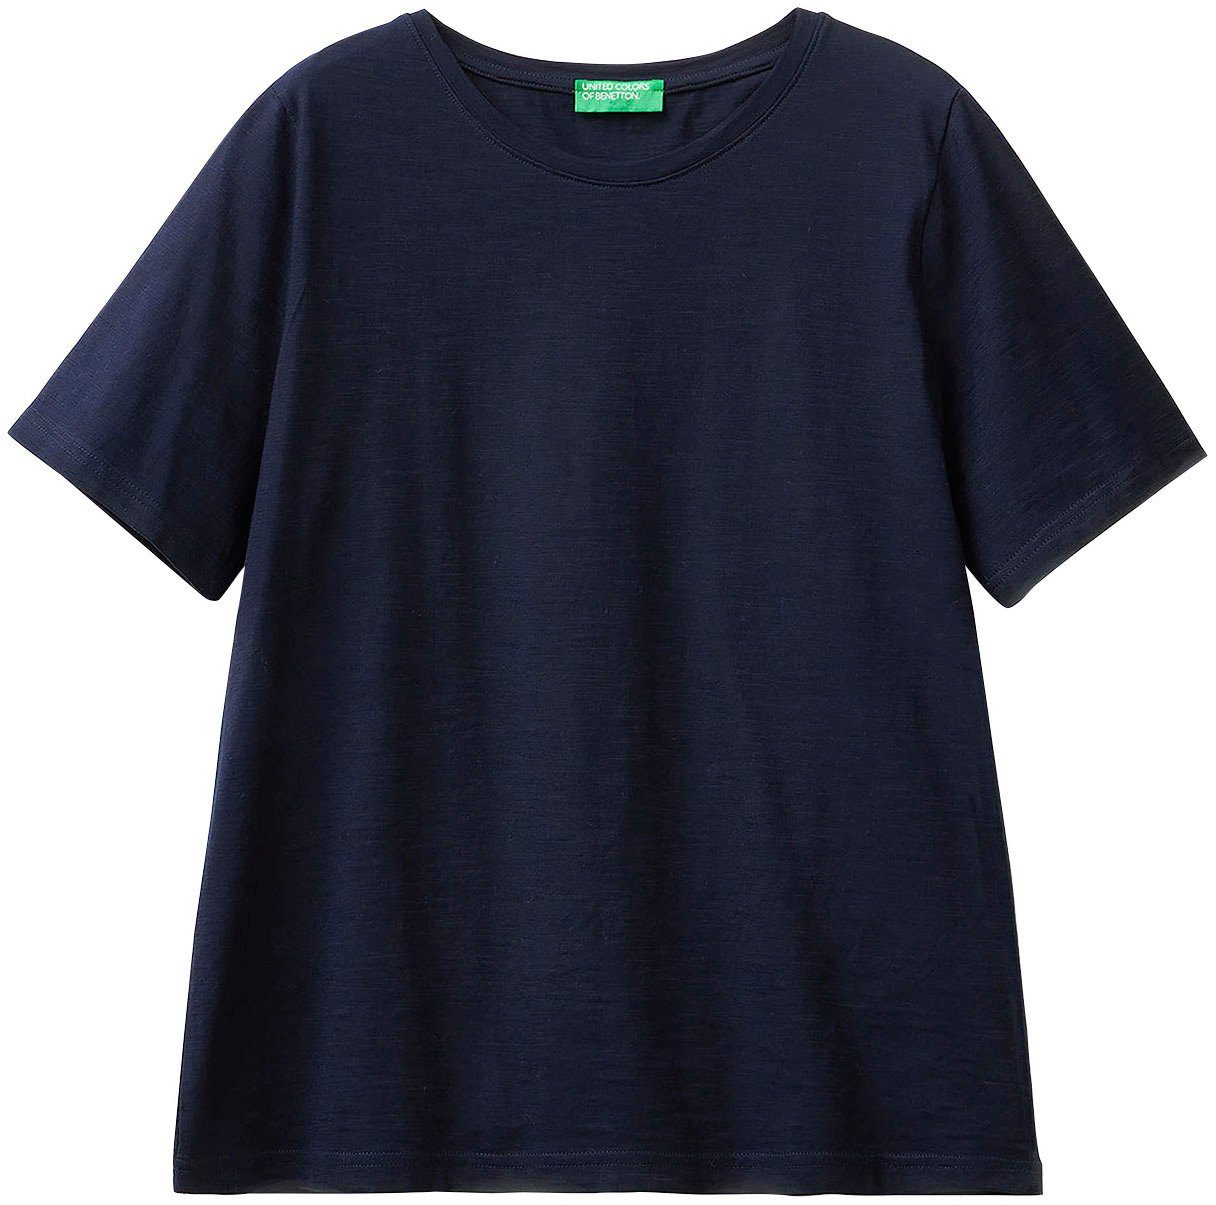 United Colors of Benetton Basic-Optik marine in T-Shirt cleaner